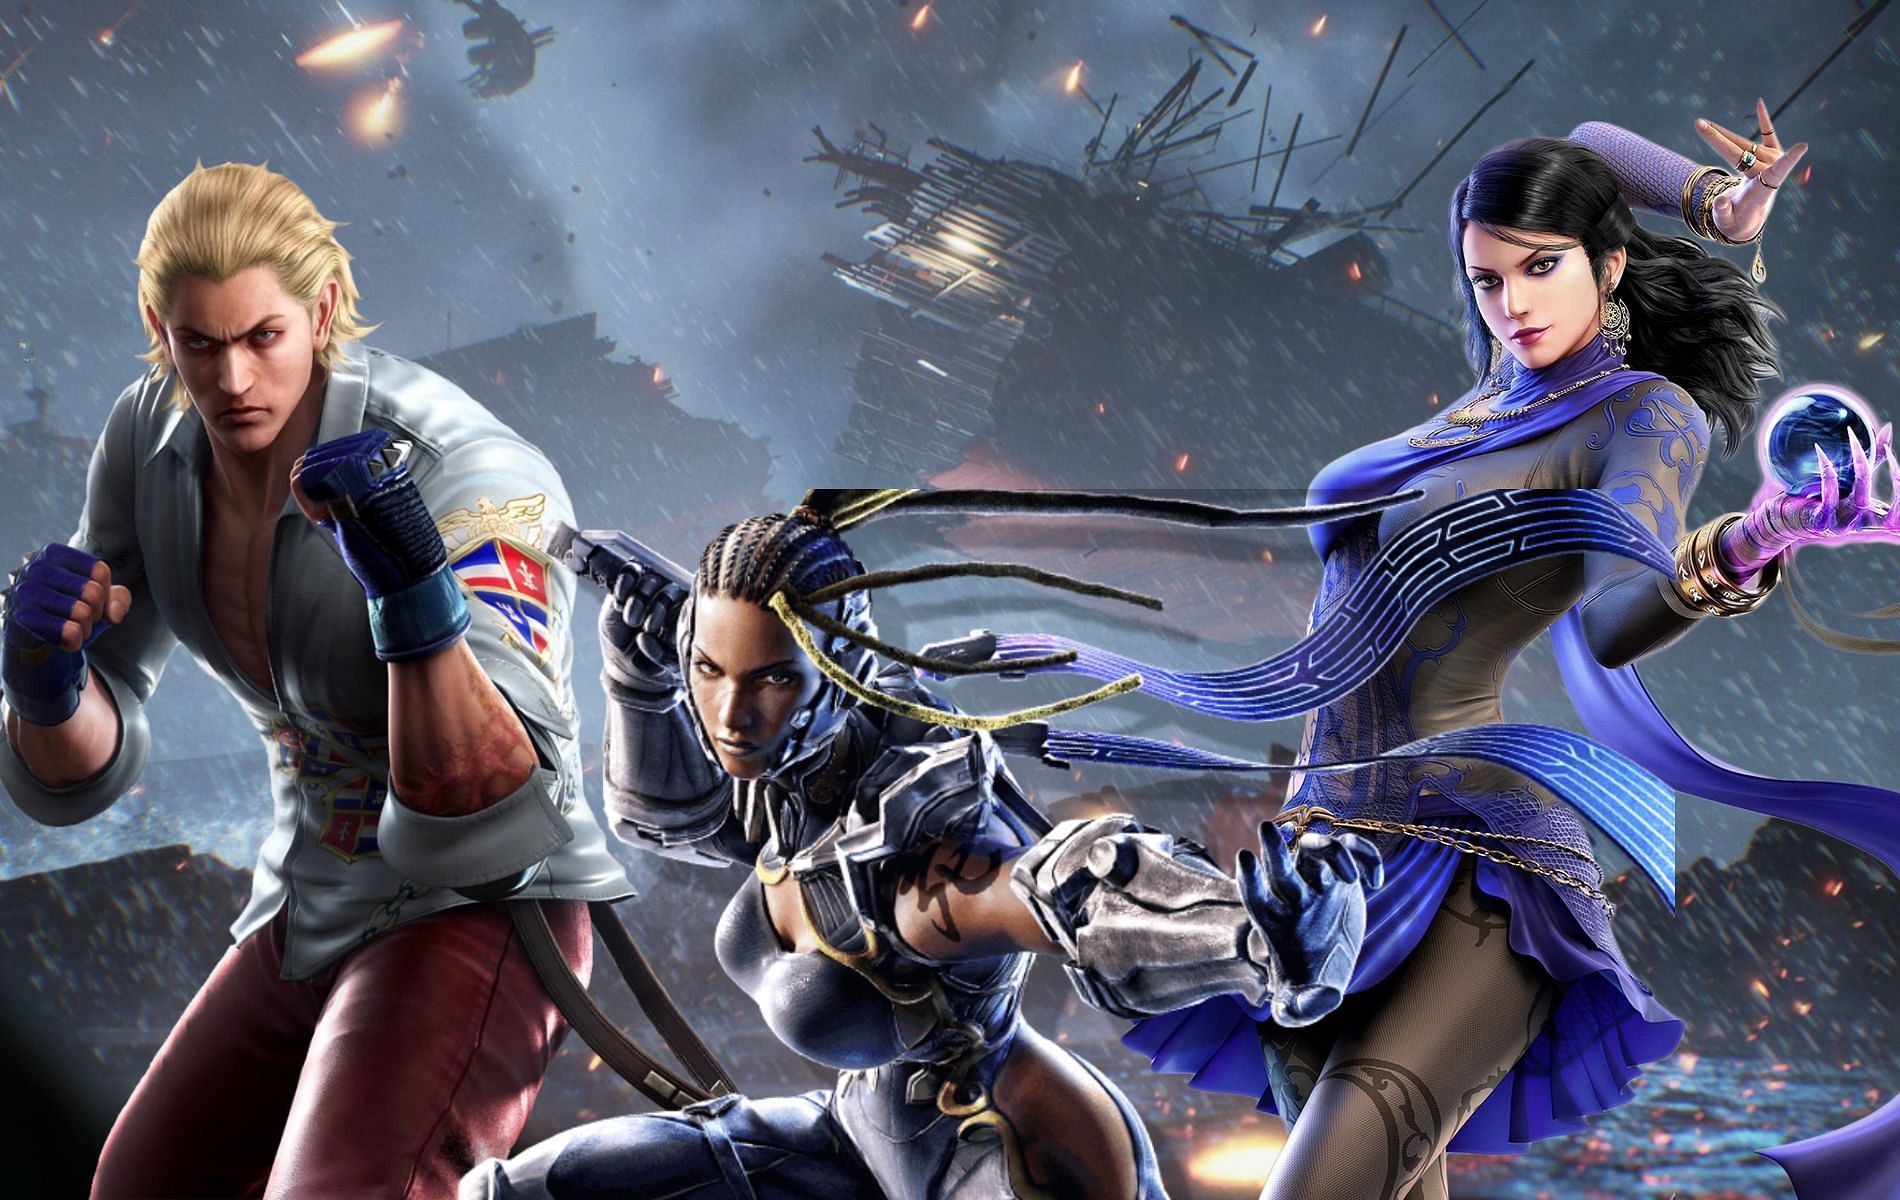 Tekken 8 unannounced fighters leaked: Raven, Zafina, Steve Fox, and more